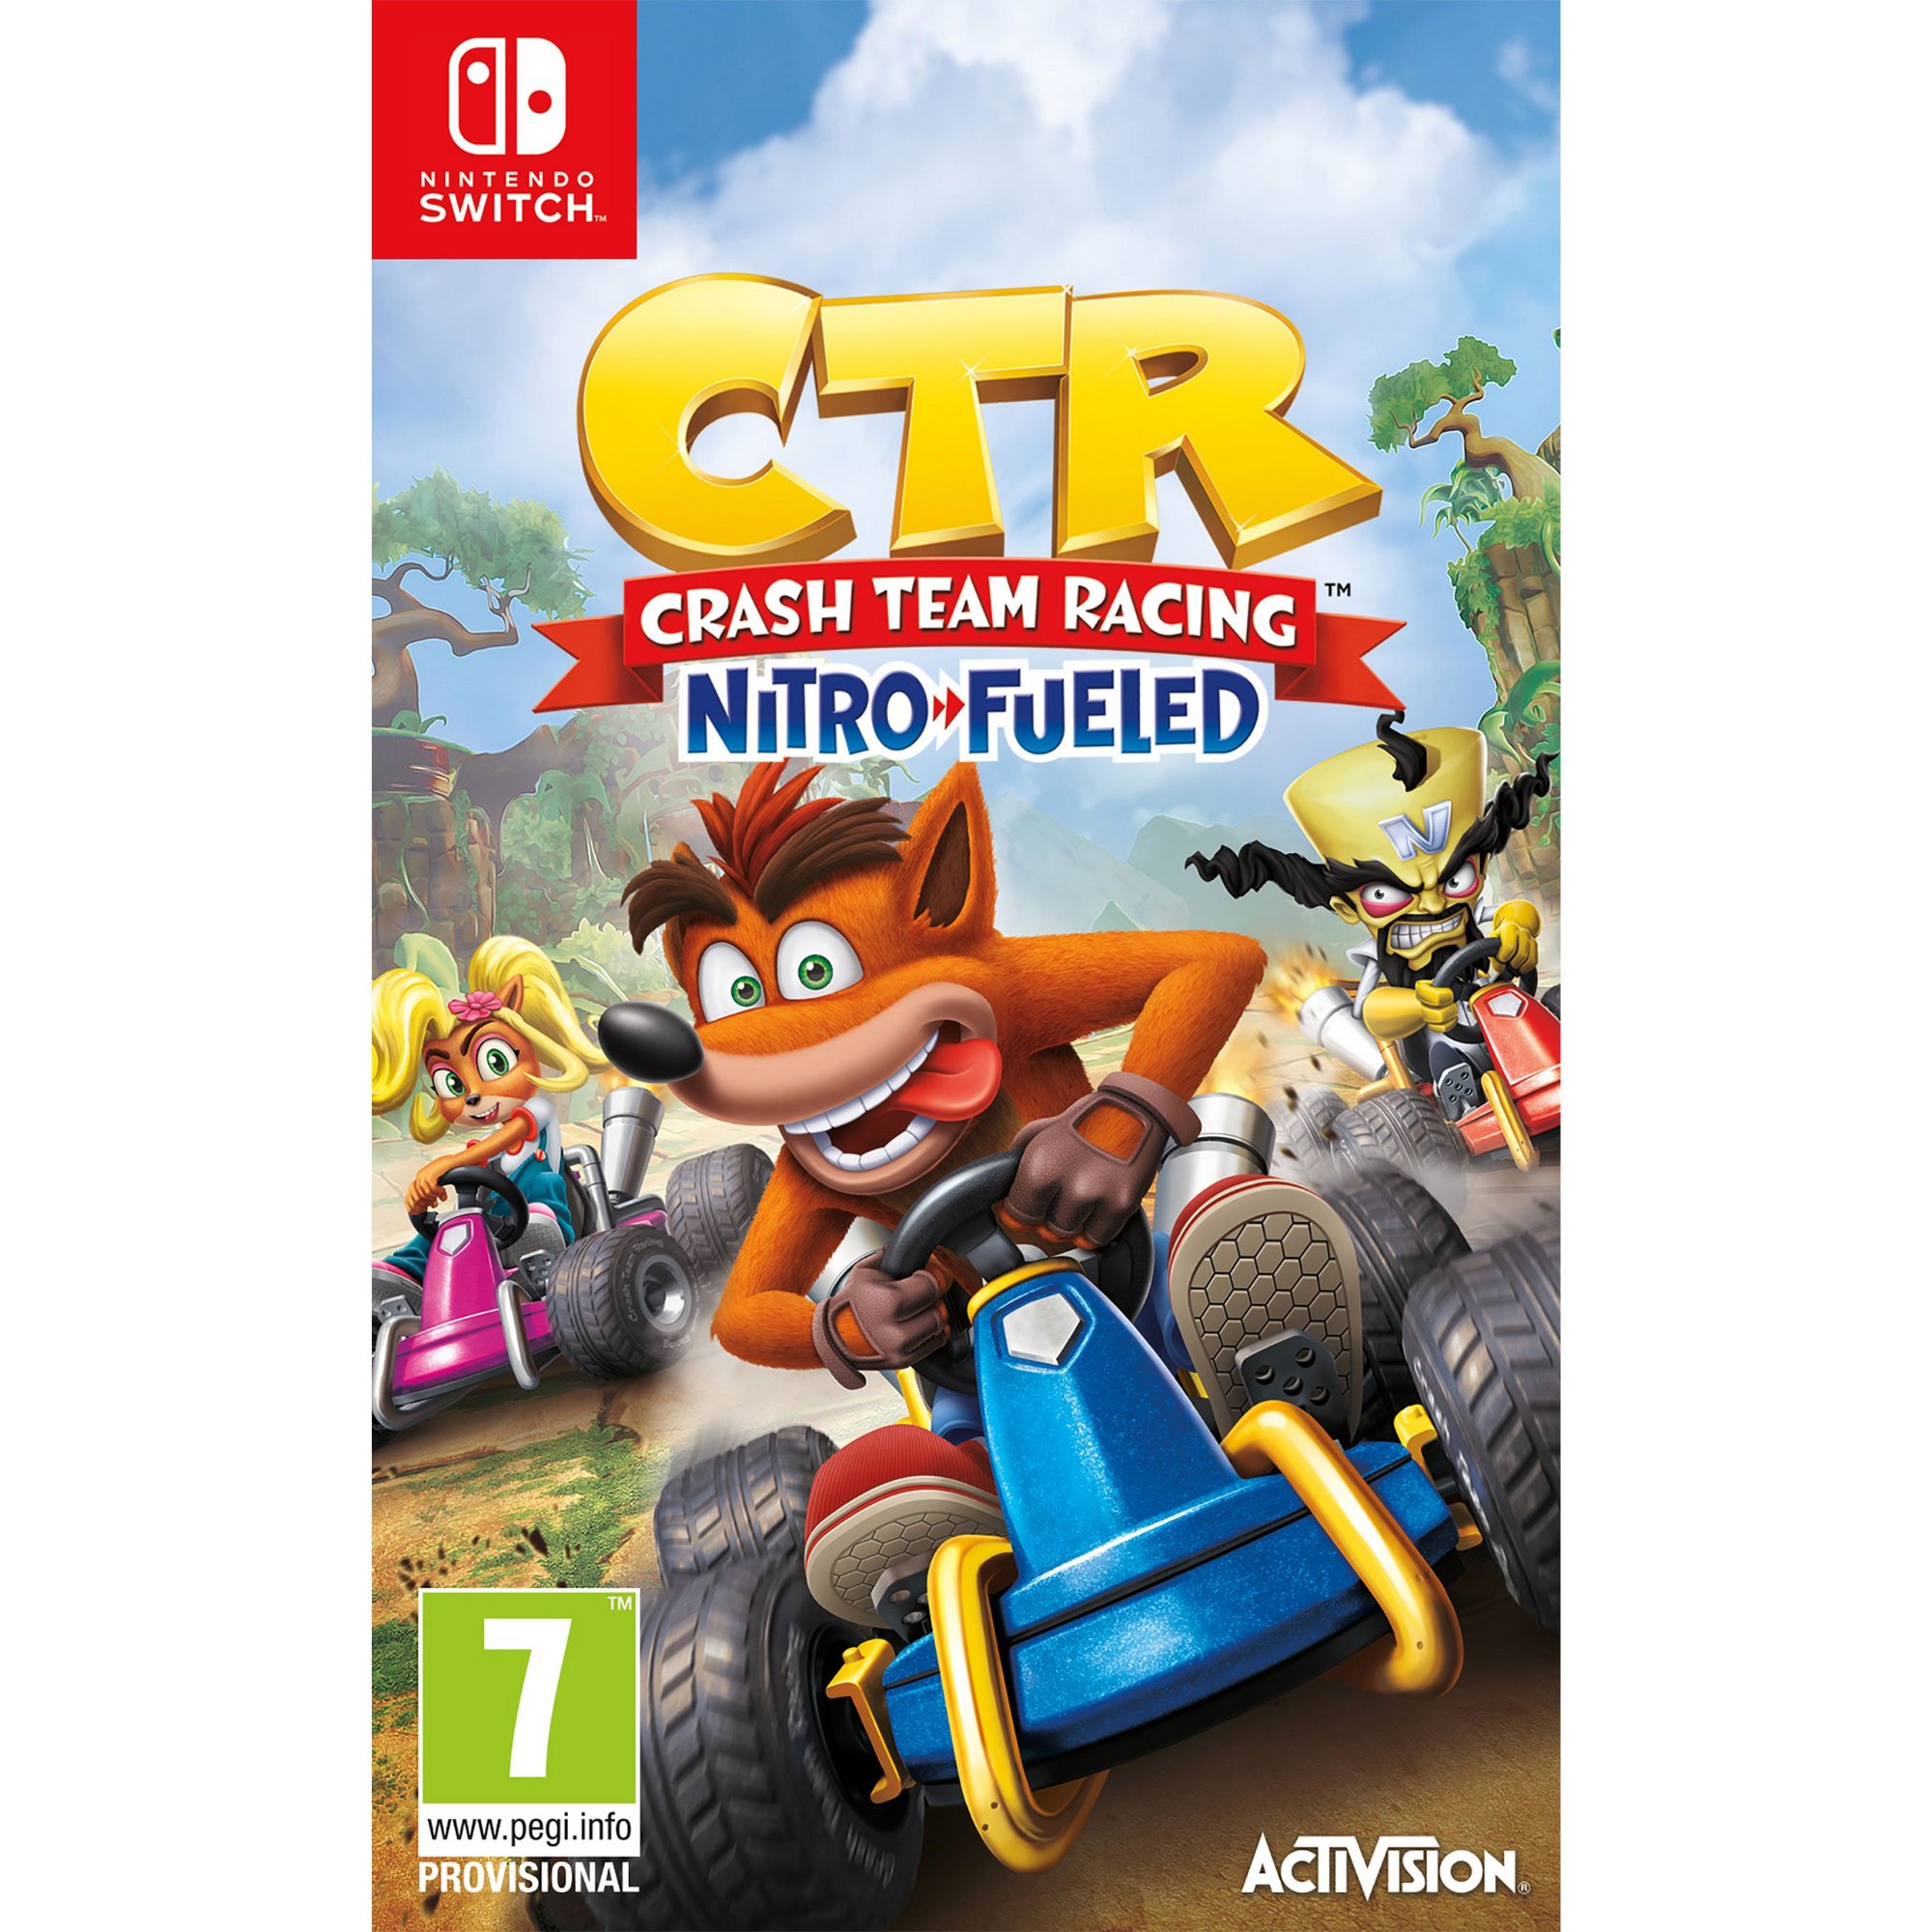 Nintendo Switch: Crash Team Racing - Nitro Fueled